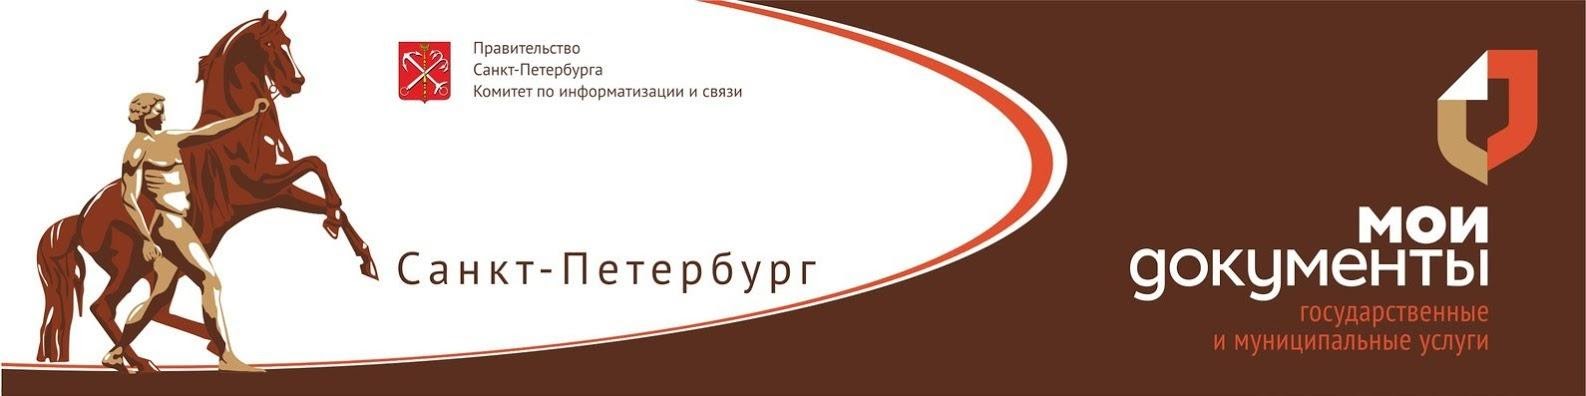 Мфц спб бесплатный телефон. МФЦ Санкт-Петербург. МФЦ Санкт-Петербург лого. МФЦ СПБ логотип.